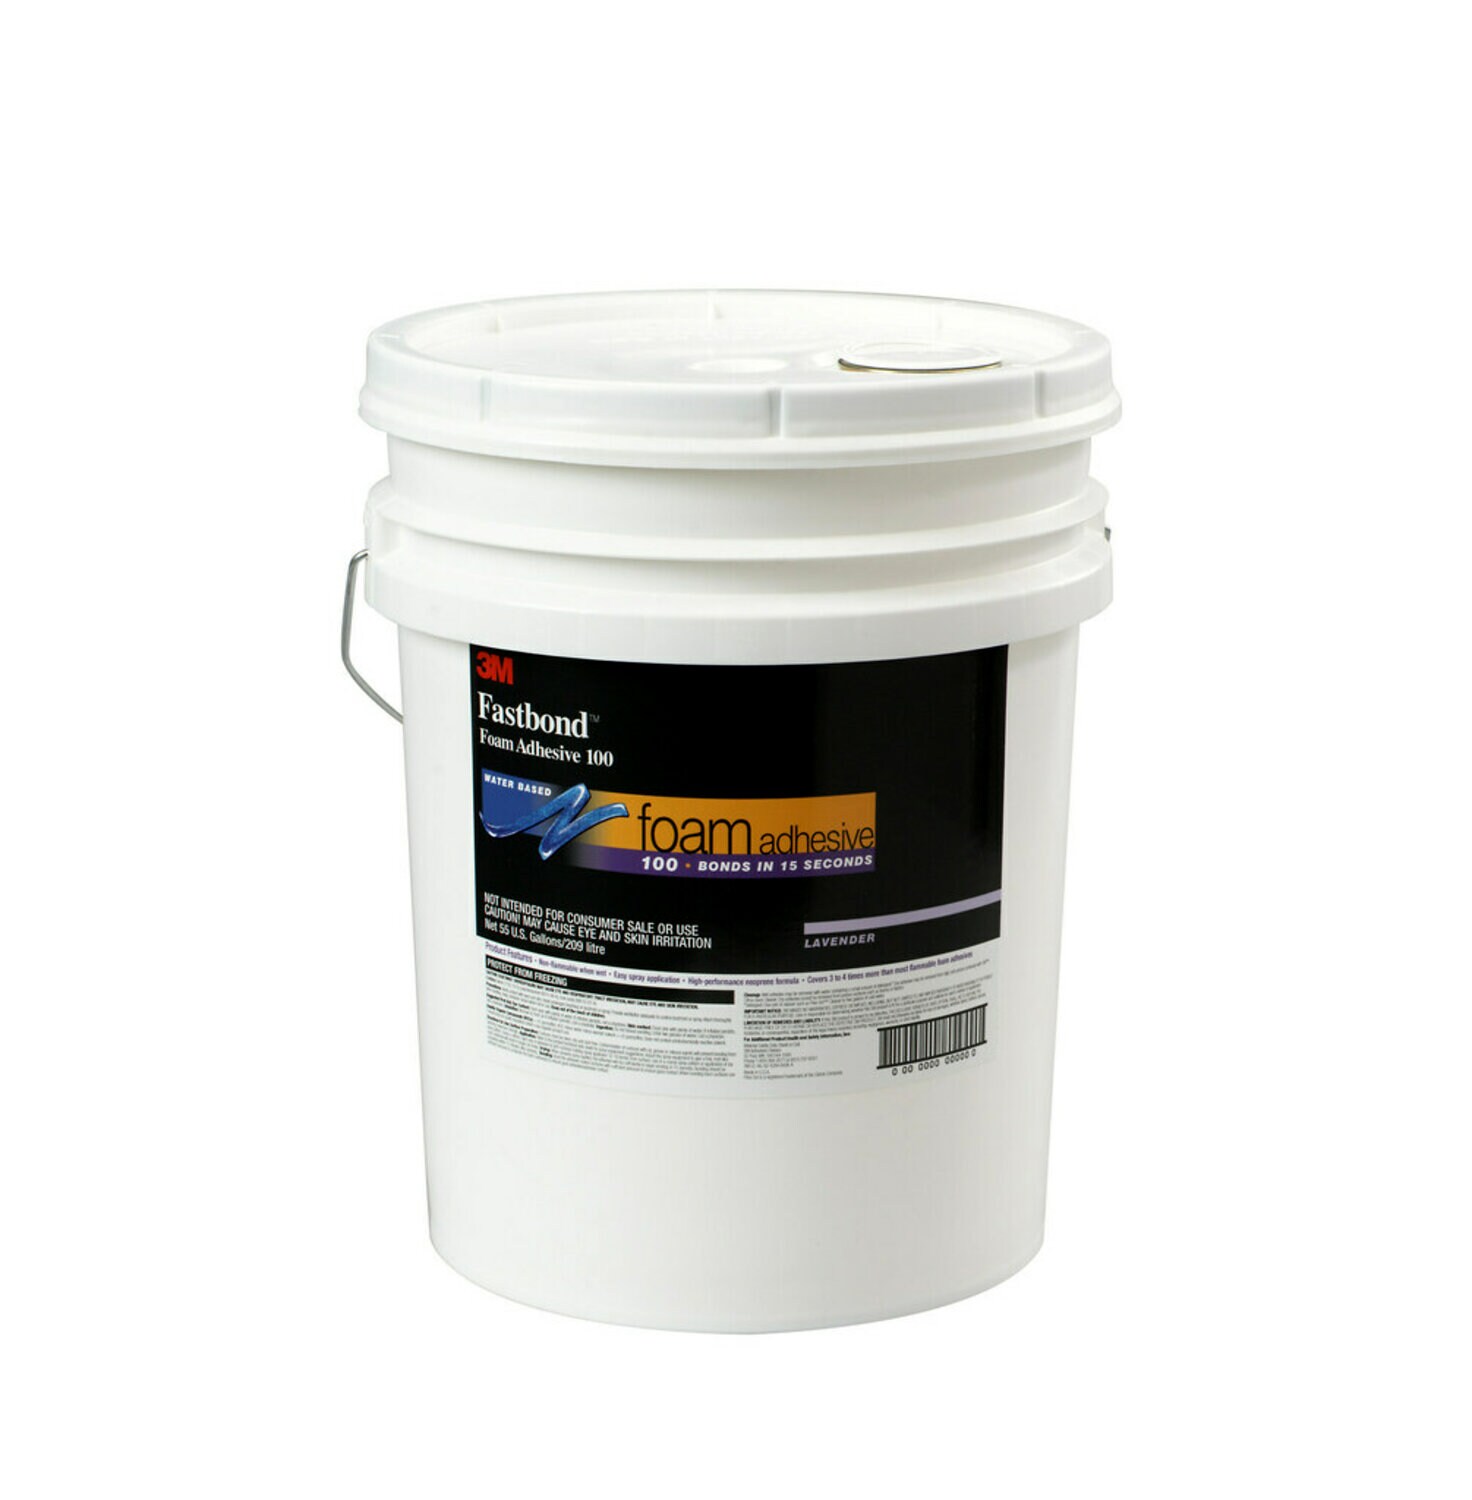 7000121392 - 3M Fastbond Foam Adhesive 100NF, Lavender, 5 Gallon Drum (Pail)